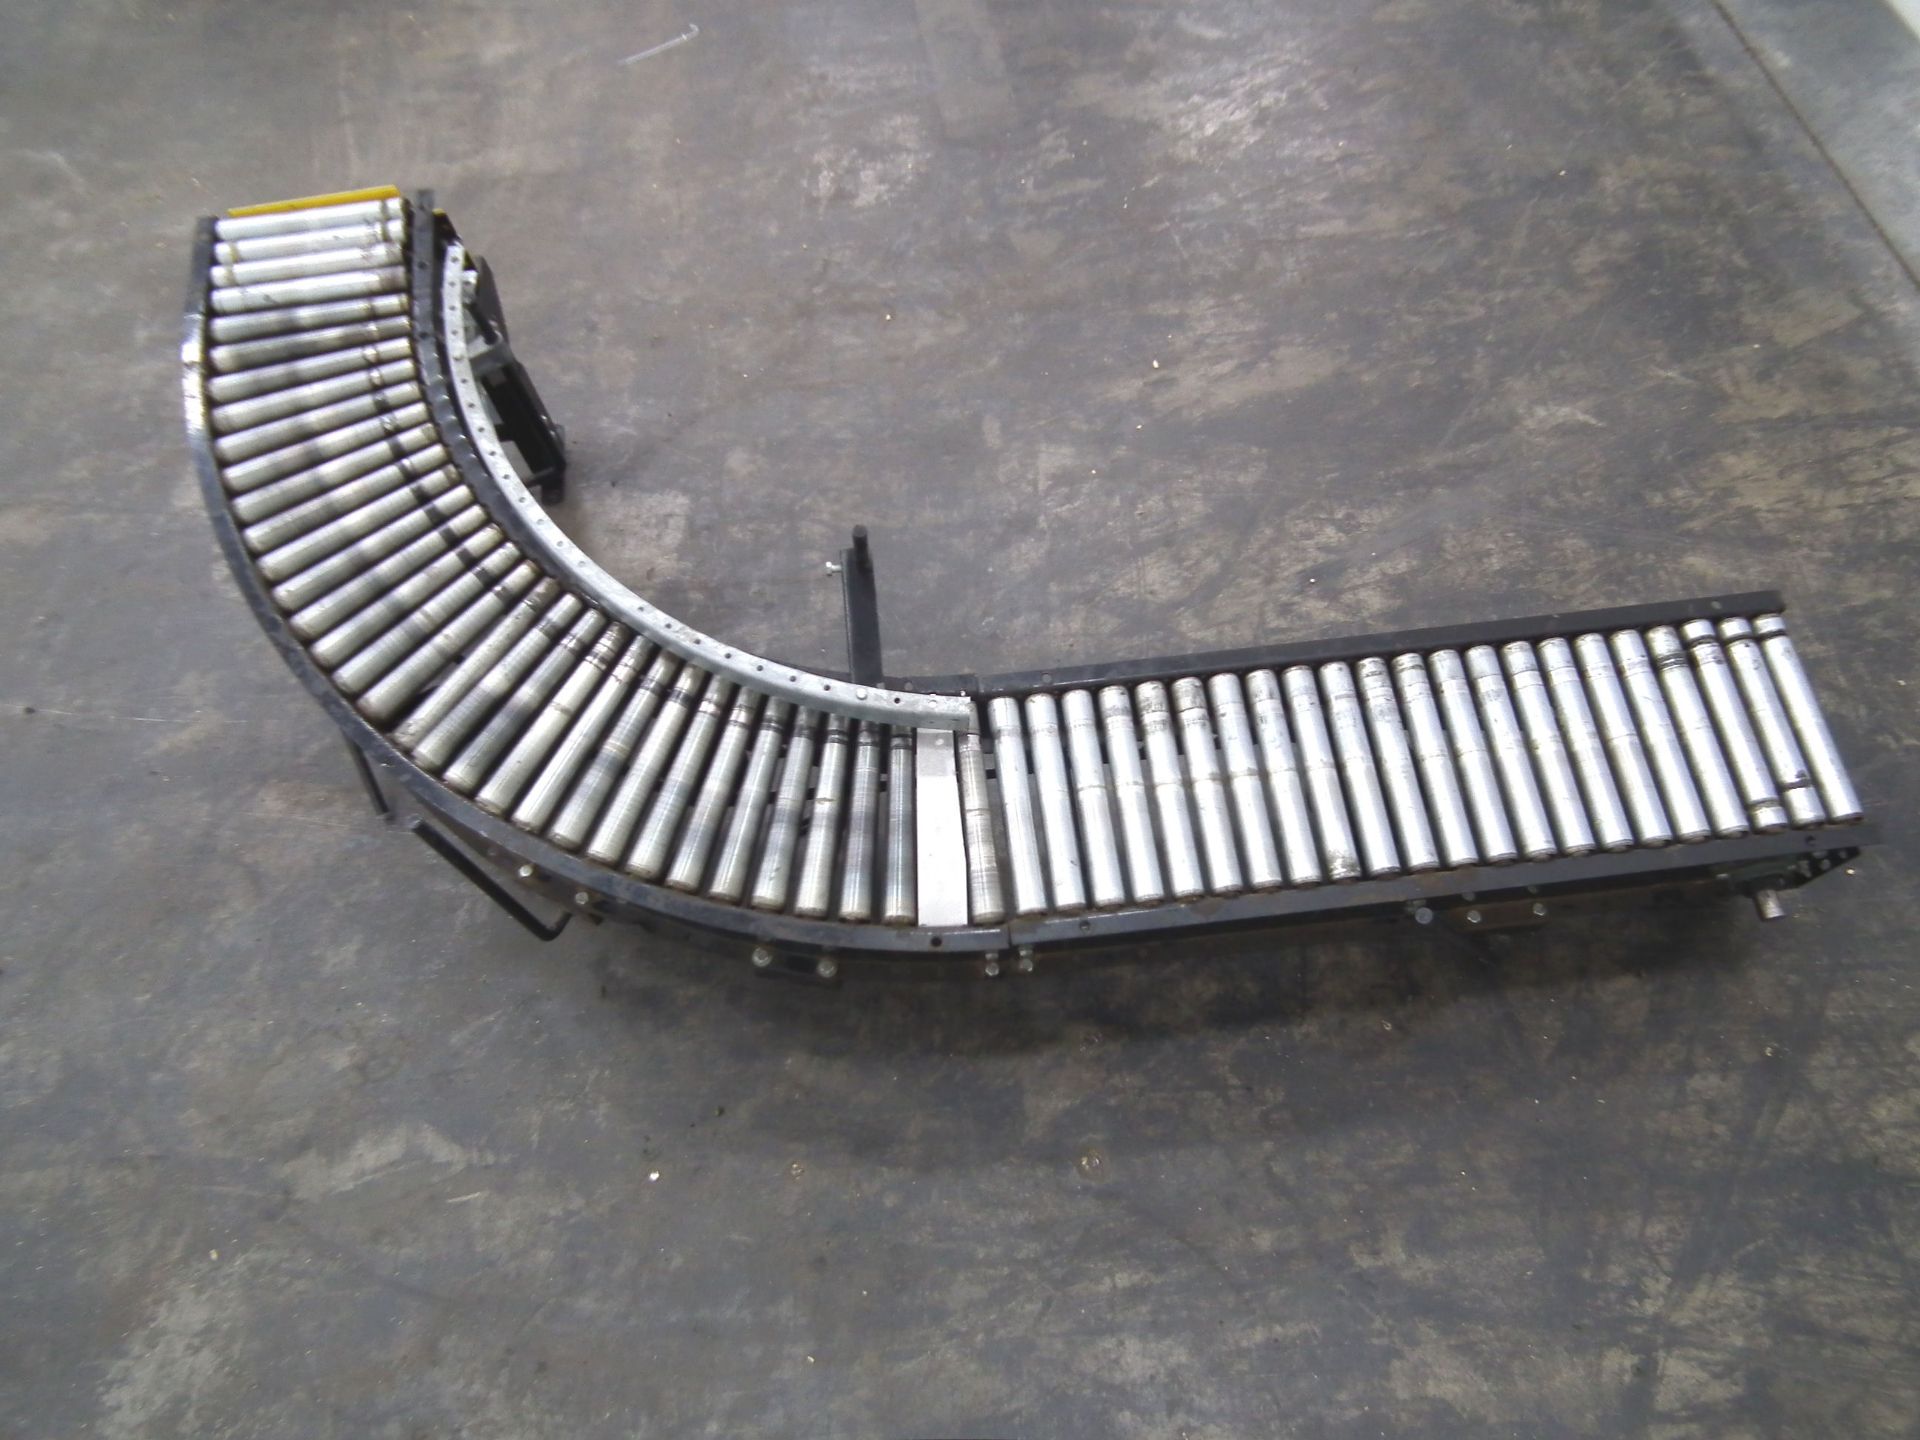 Hytrol 90 Degree Curved Conveyor A7459 - Image 4 of 4